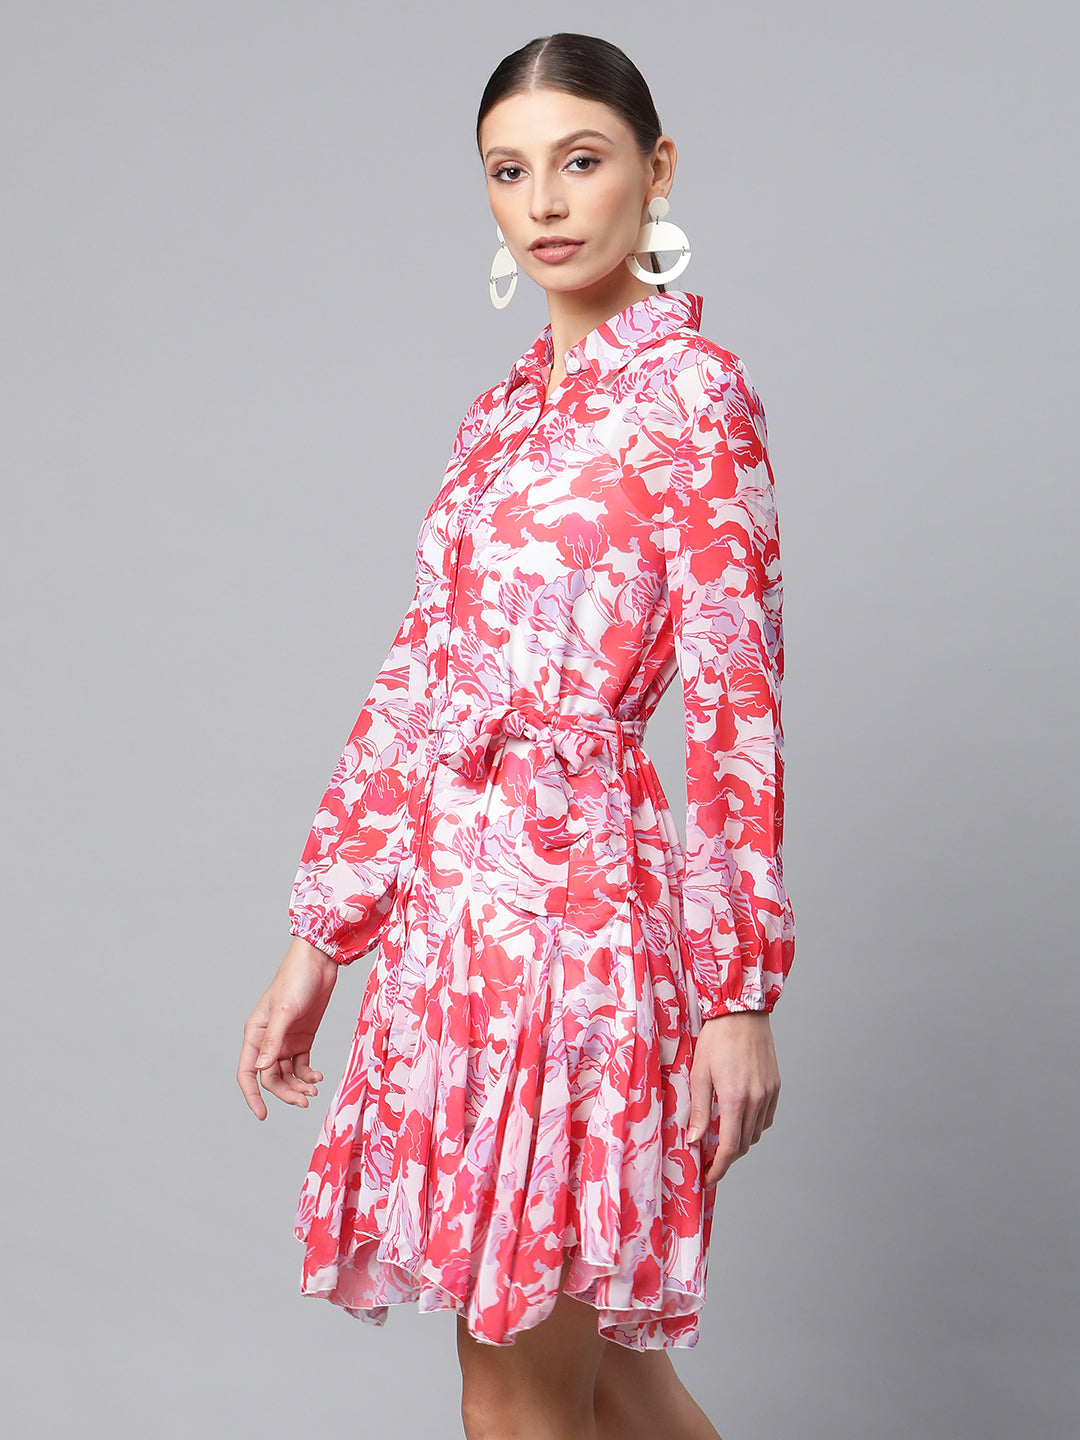 women reddish pink floral printed dress